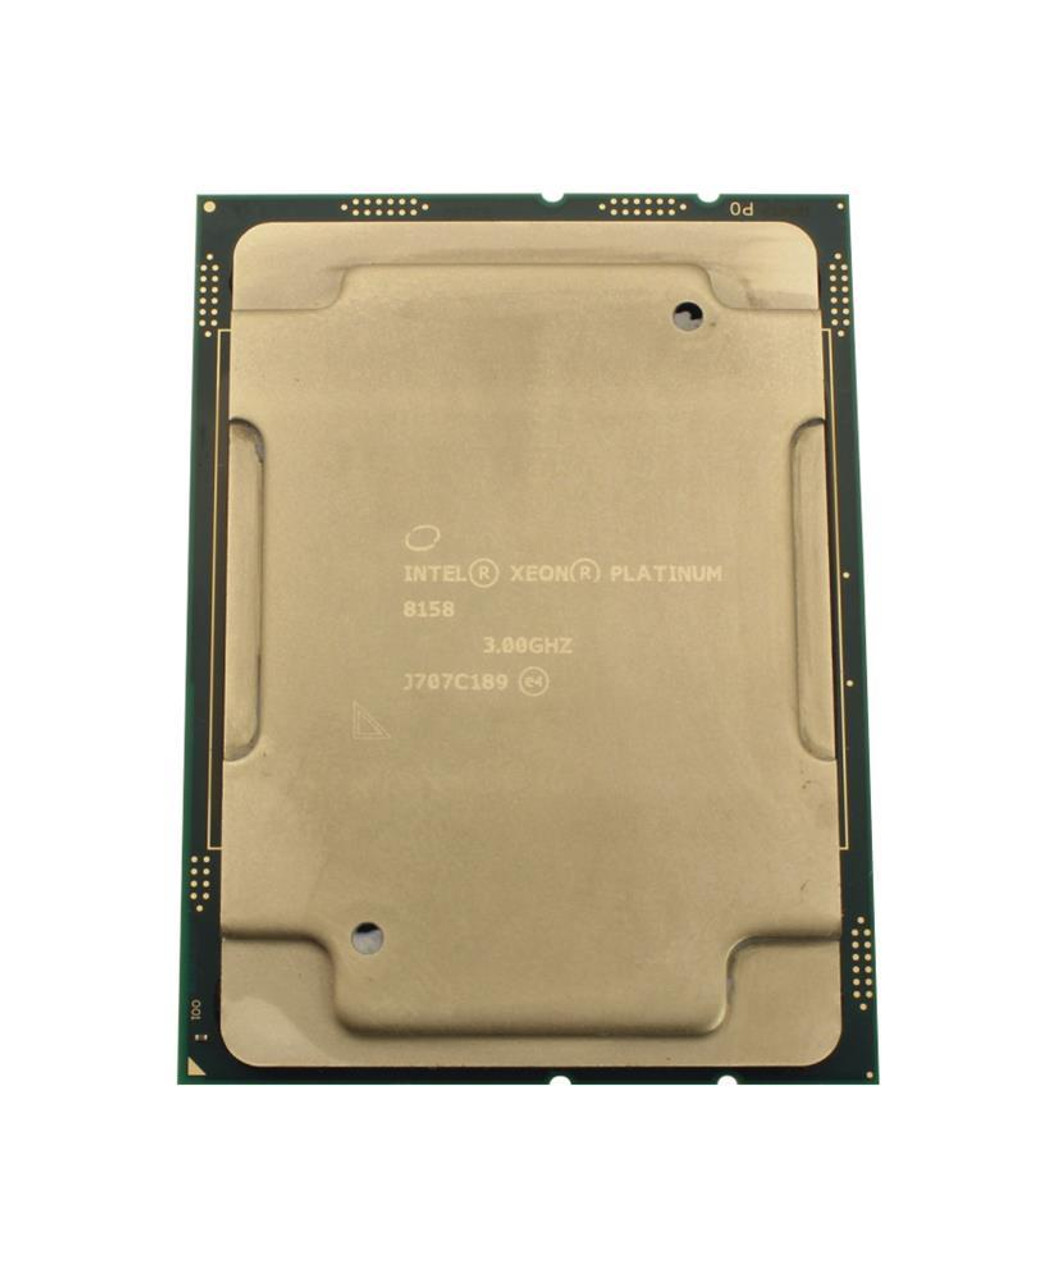 Lenovo 3.00GHz 10.40GT/s UPI 24.75MB L3 Cache Intel Xeon Platinum 8158 12-Core Processor Upgrade